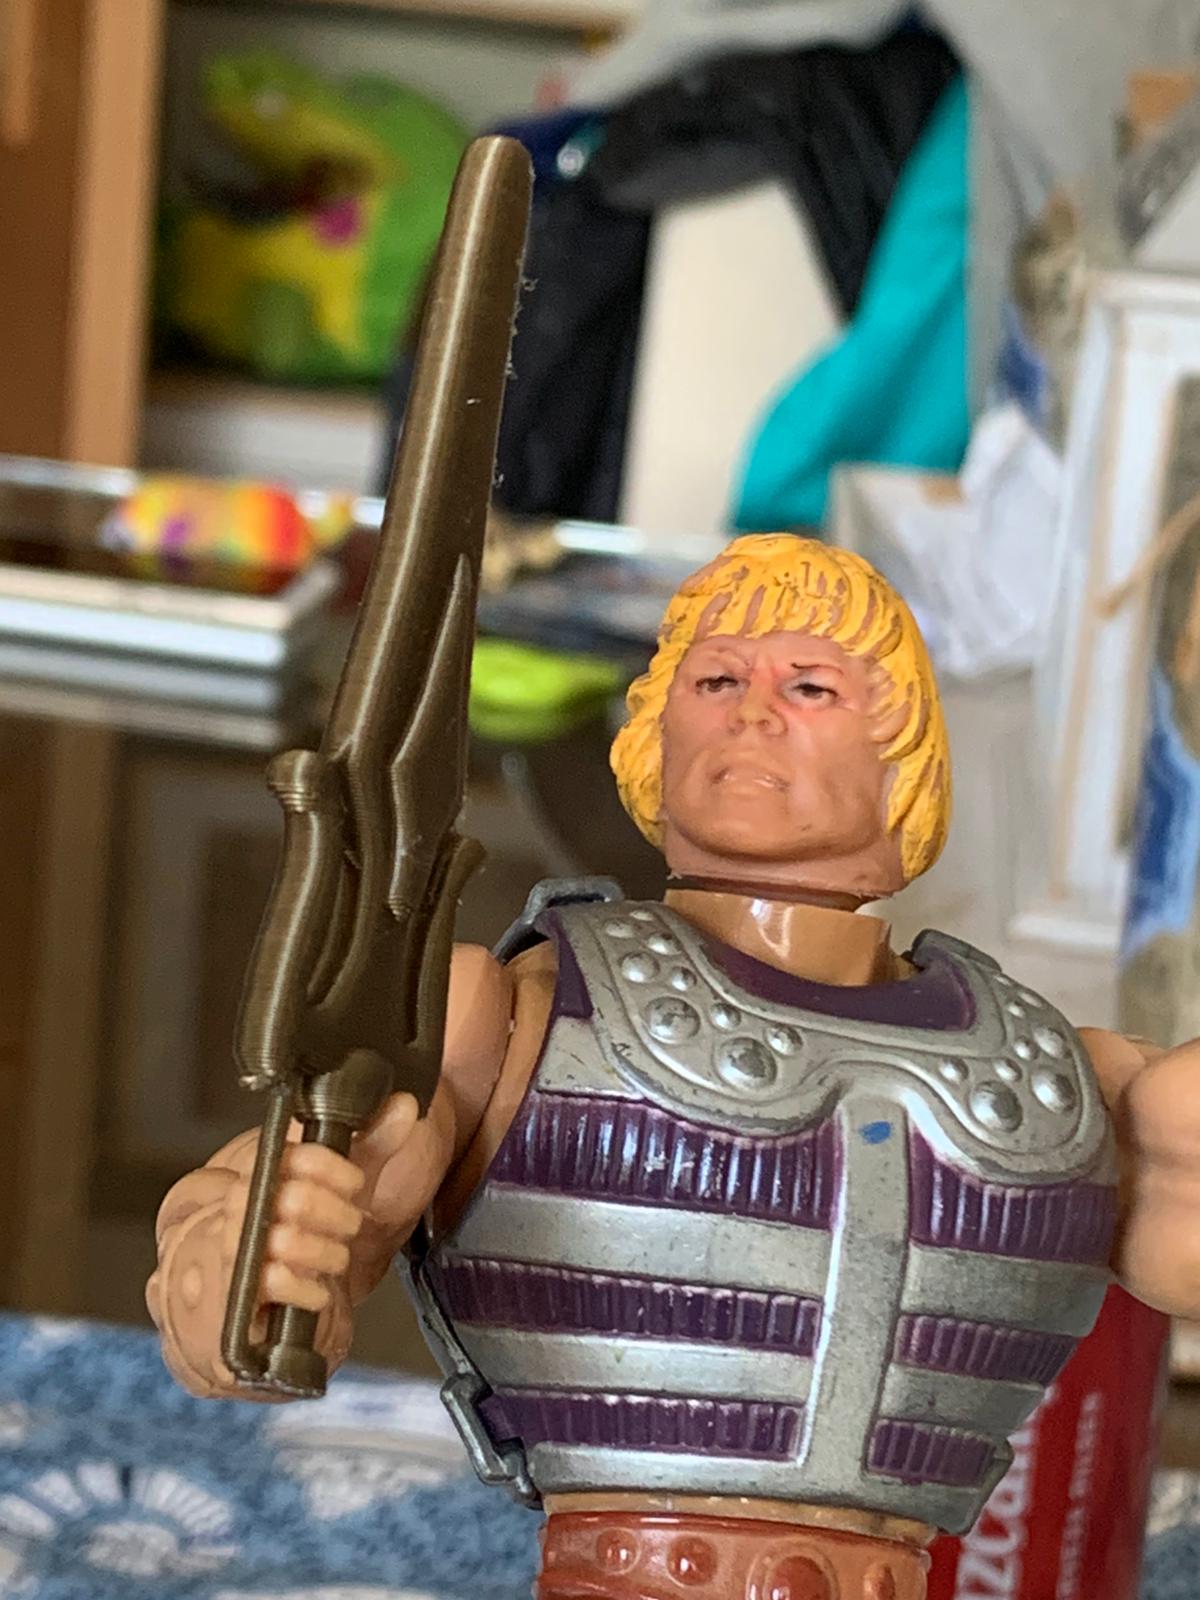 He-Man sword replica